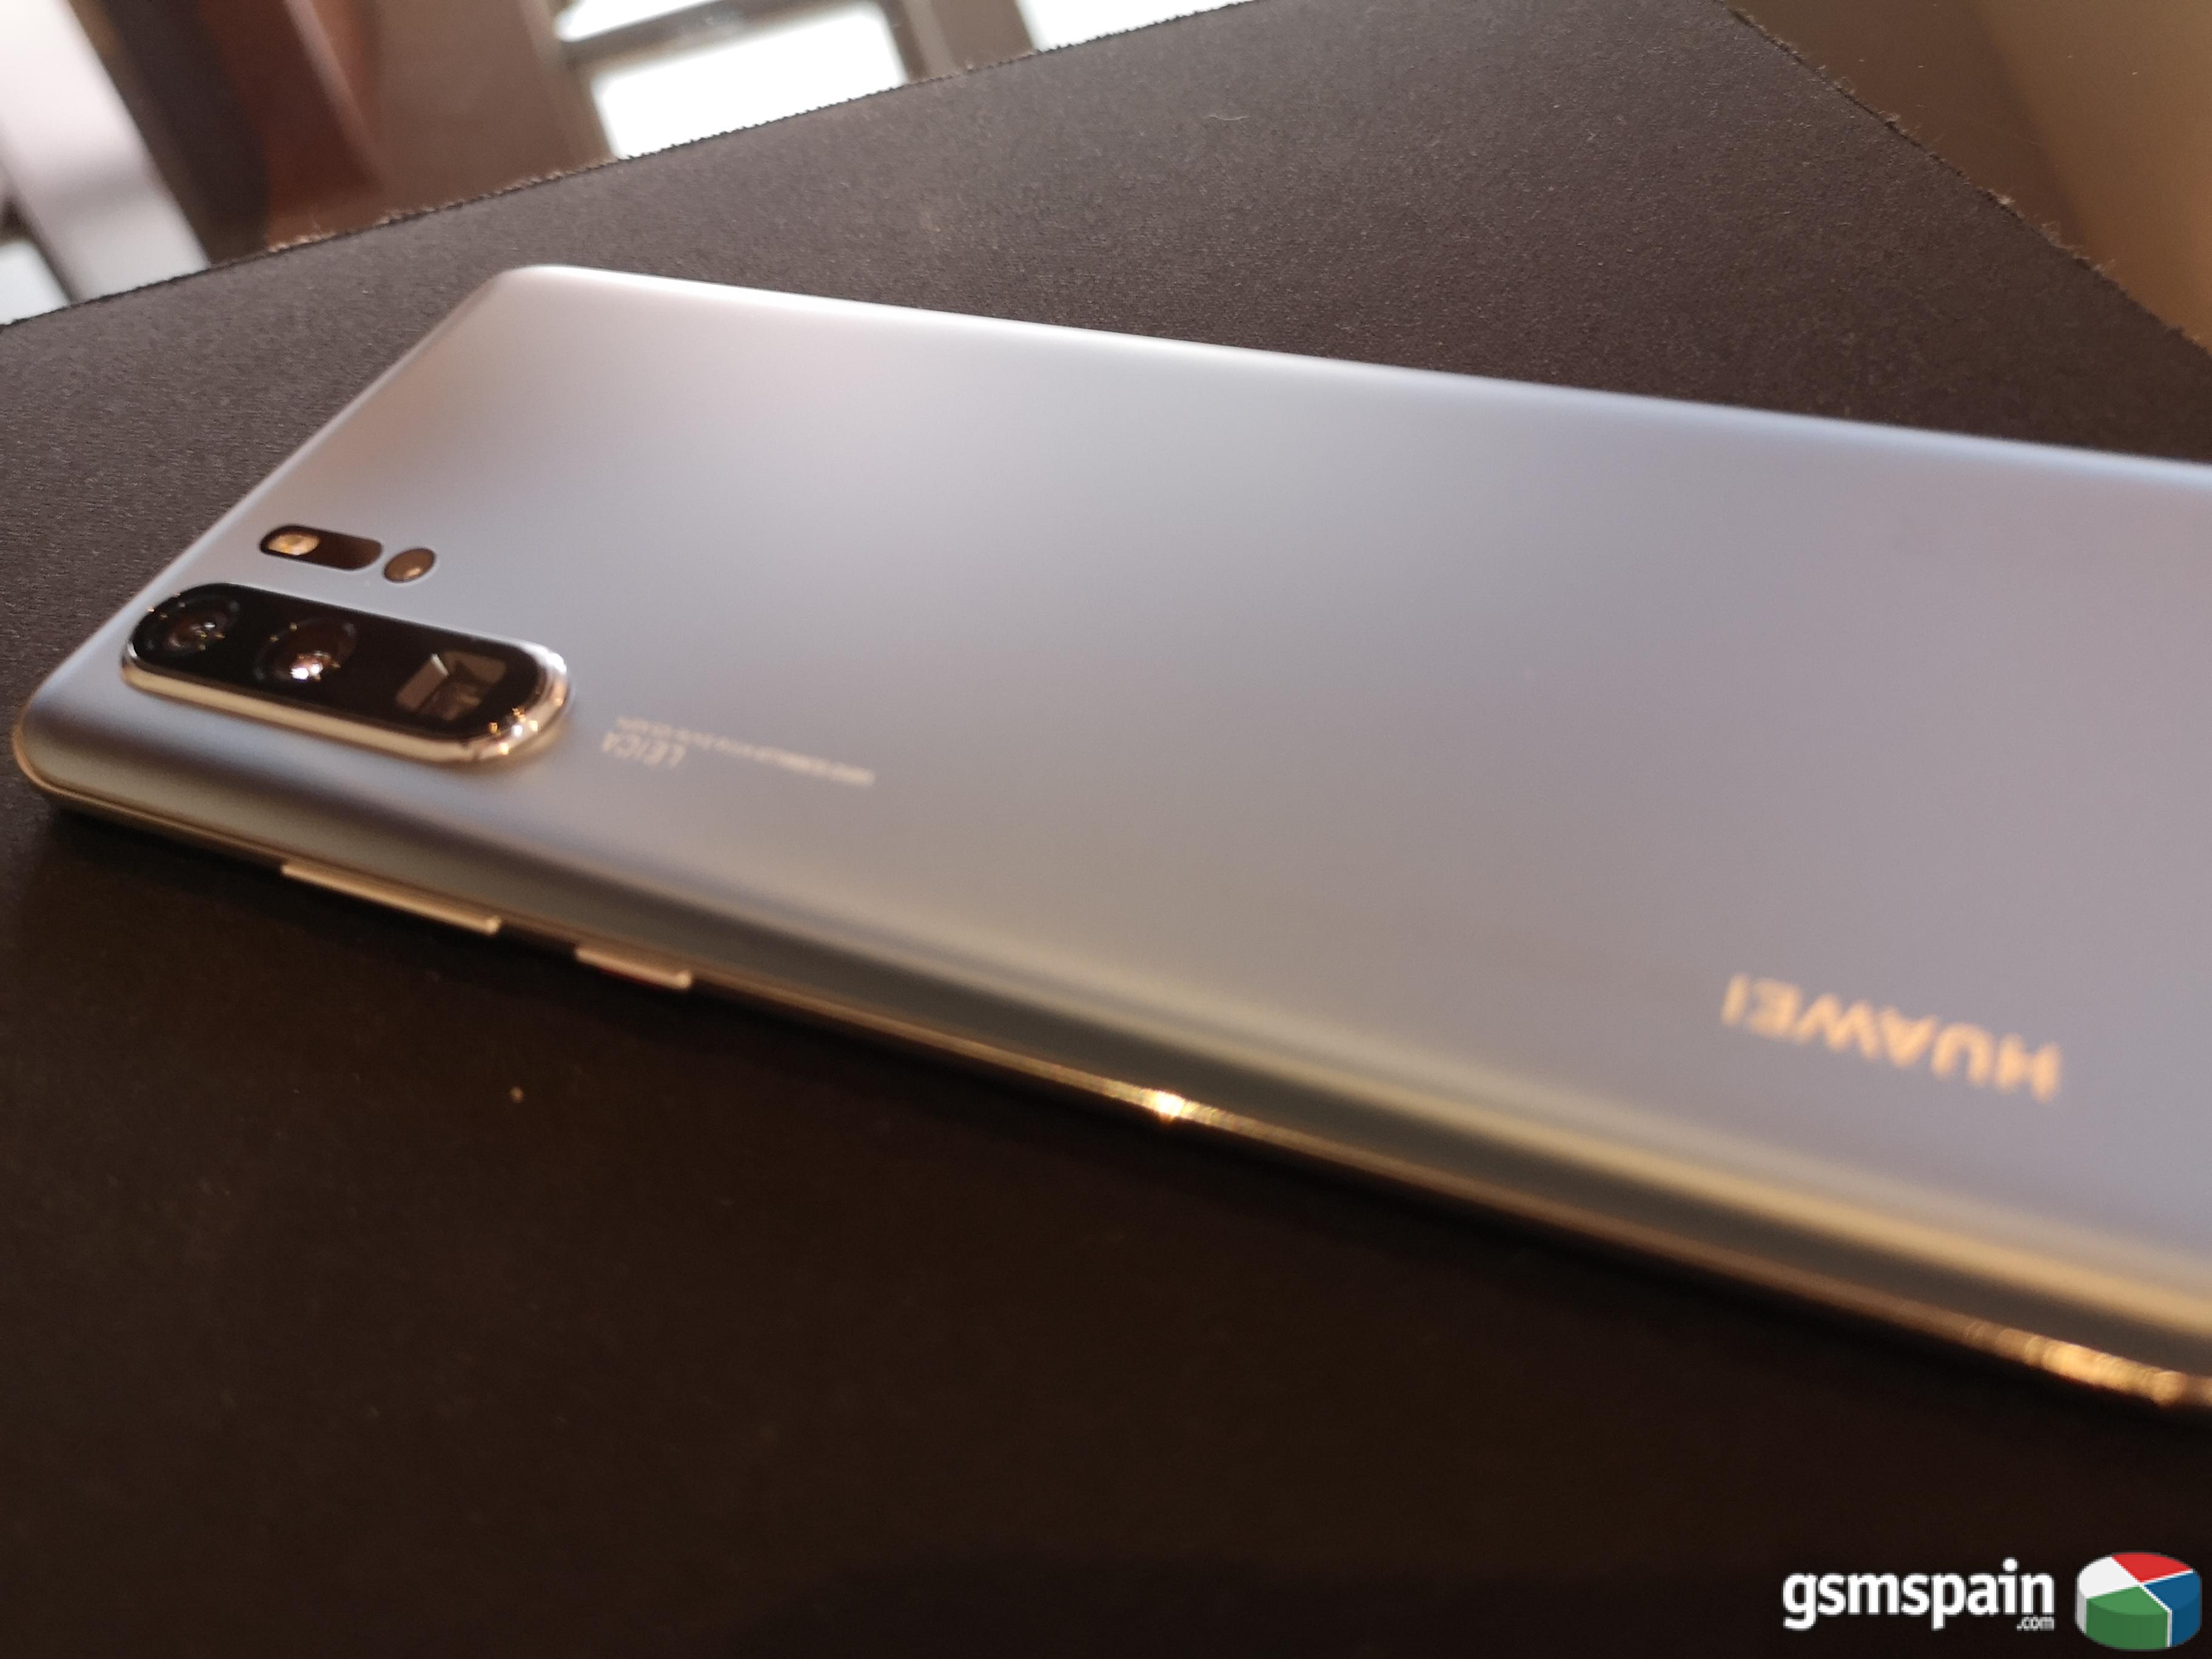 [VENDO] Huawei P30 Pro New Edition 256